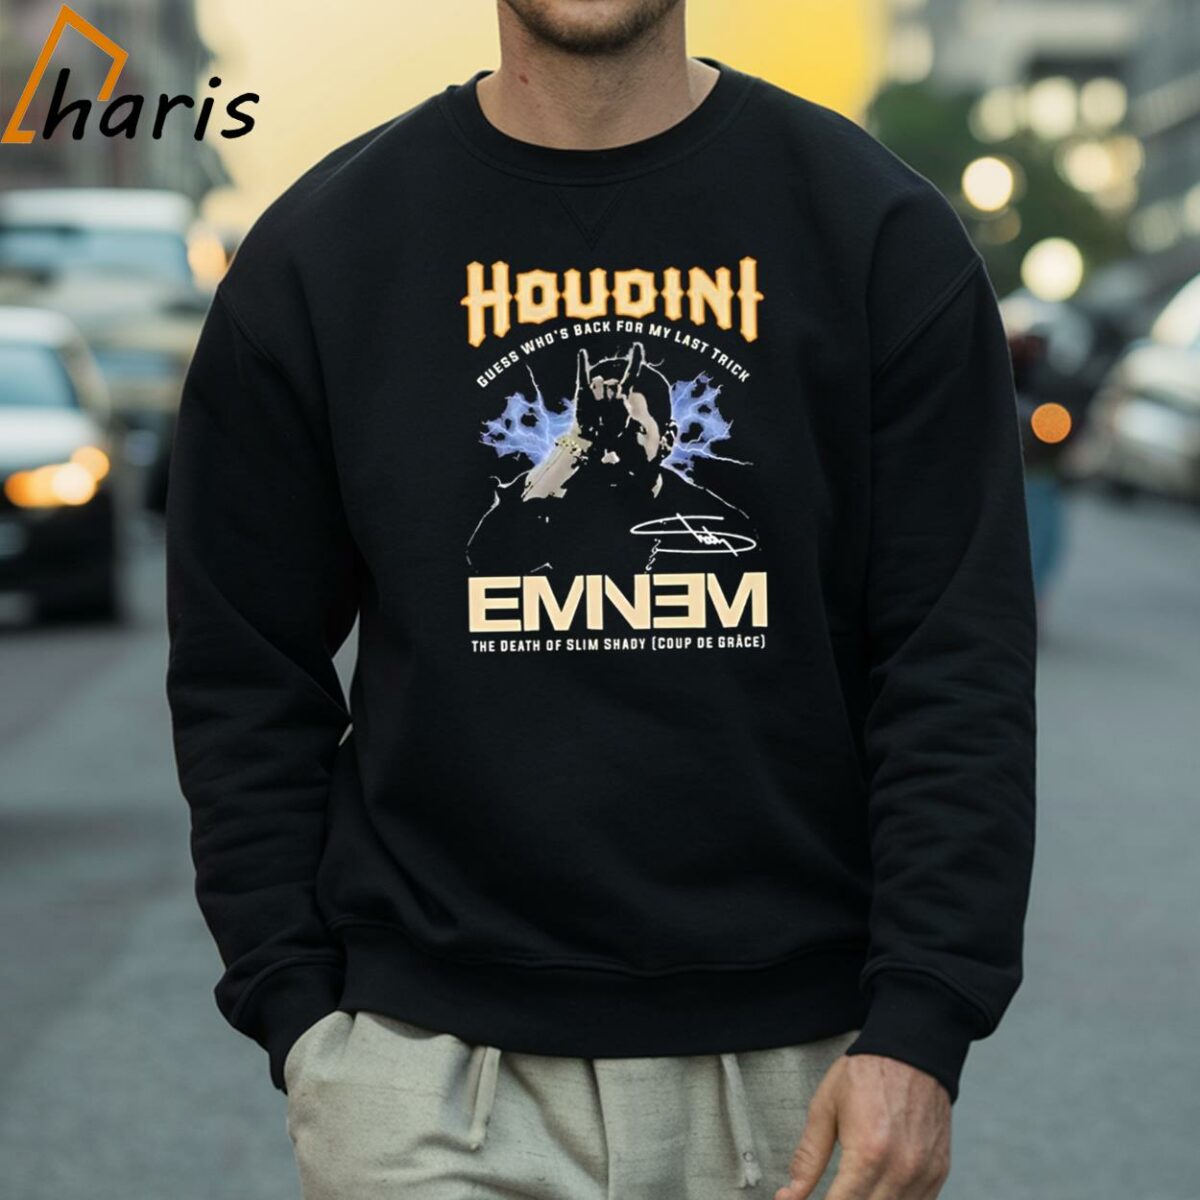 Houdini Guess Whos Back For My Last Trick Eminem The Death Of Slim Shady Vintage T Shirt 4 Sweatshirt